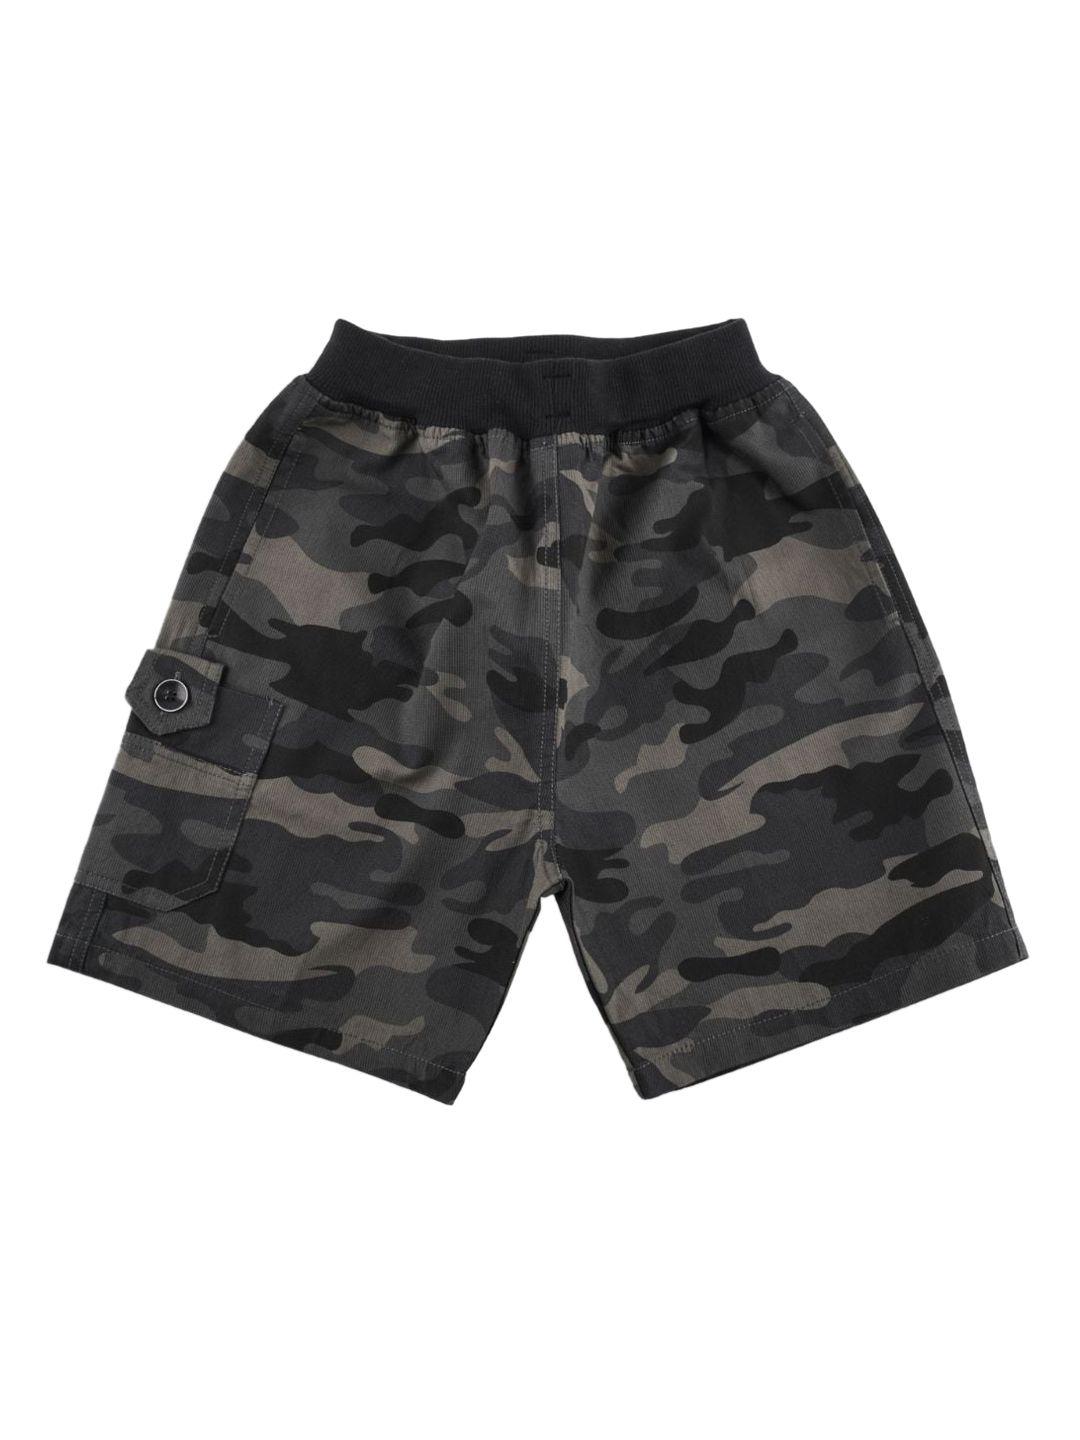 vedana boys grey camouflage printed cotton shorts